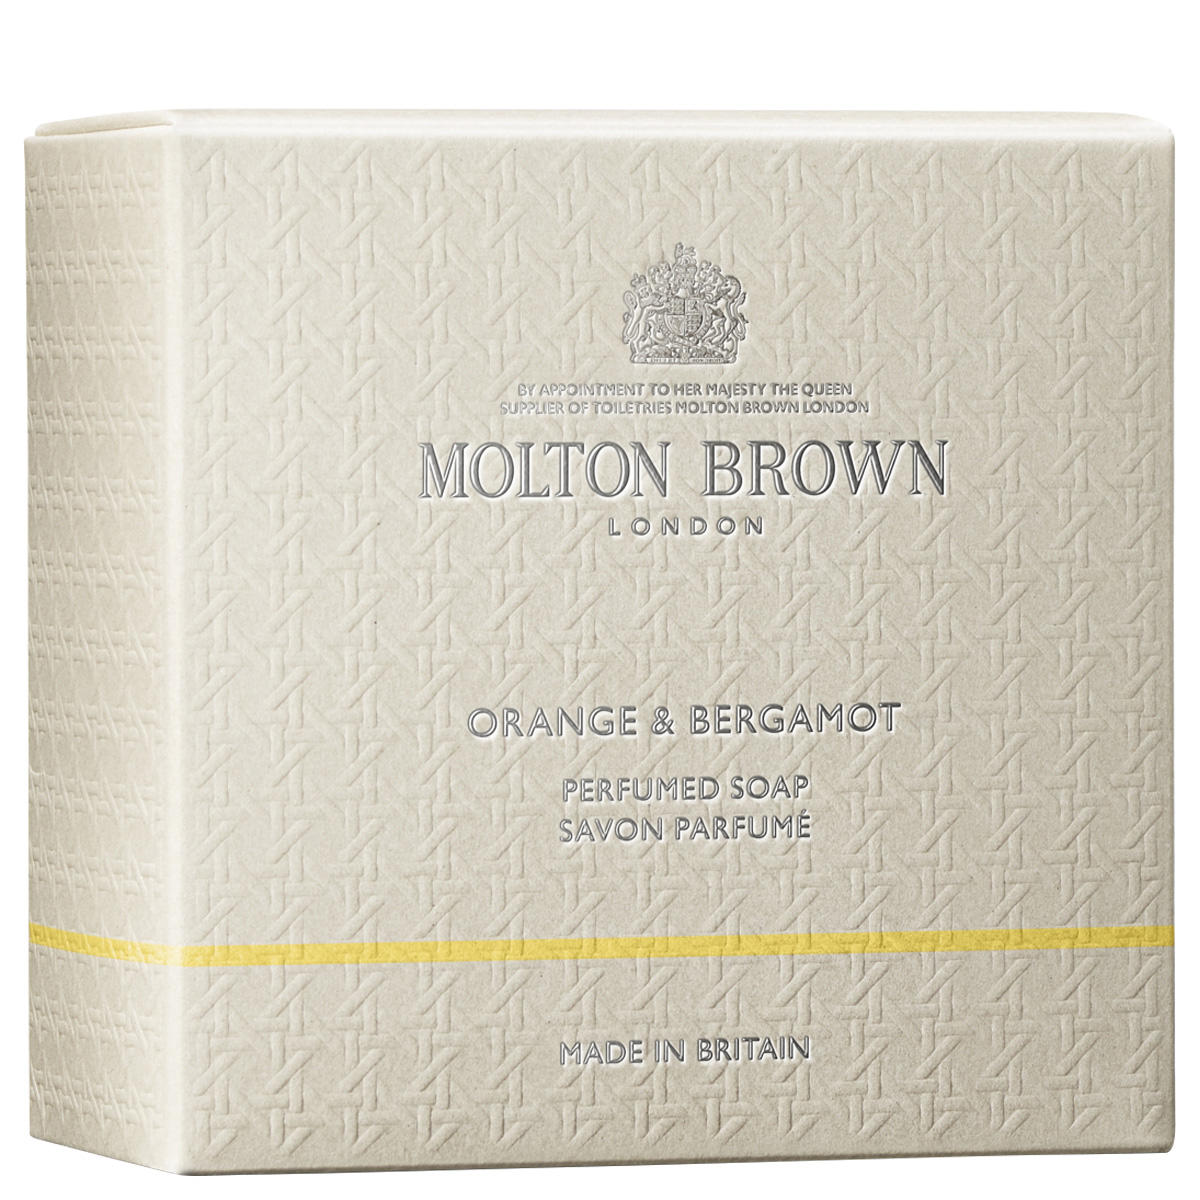 MOLTON BROWN Orange & Bergamot Perfumed Soap 150 g - 4